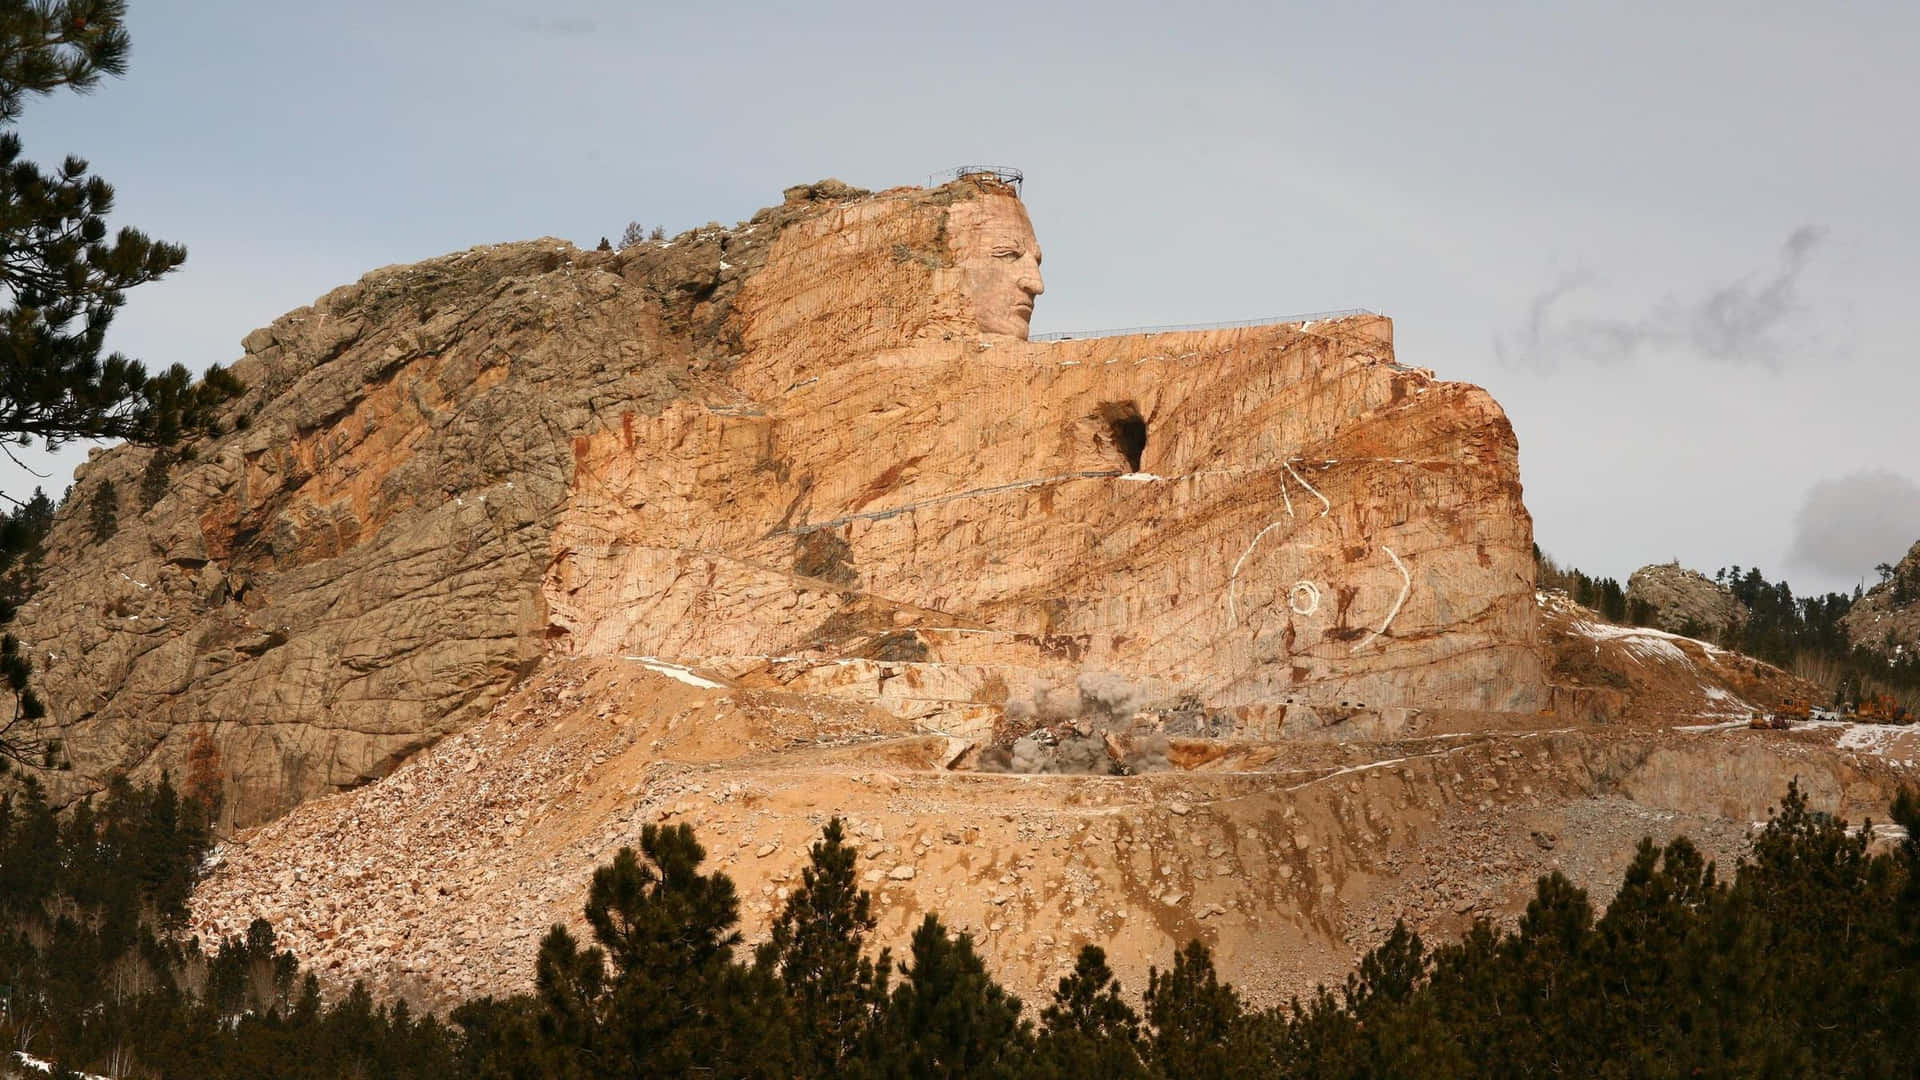 Chief Crazy Horse - A Legendary Native American Warrior